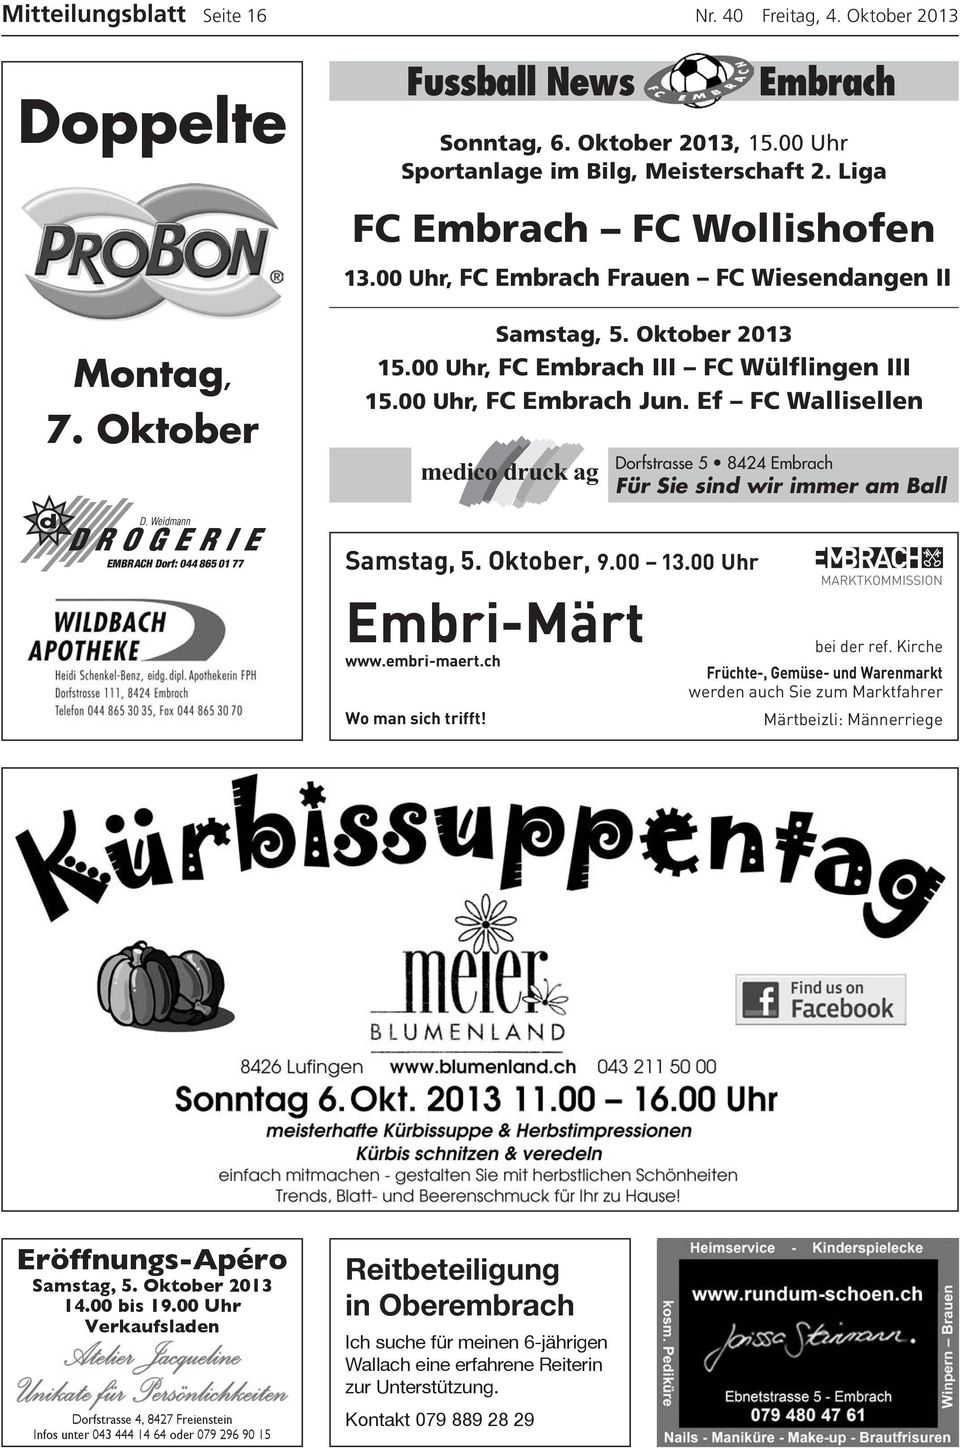 00 Uhr, FC Embrach Frauen FC Wiesendangen II Embrach Samstag, 5. Oktober 2013 15.00 Uhr, FC Embrach III FC Wülflingen III 15.00 Uhr, FC Embrach Jun.